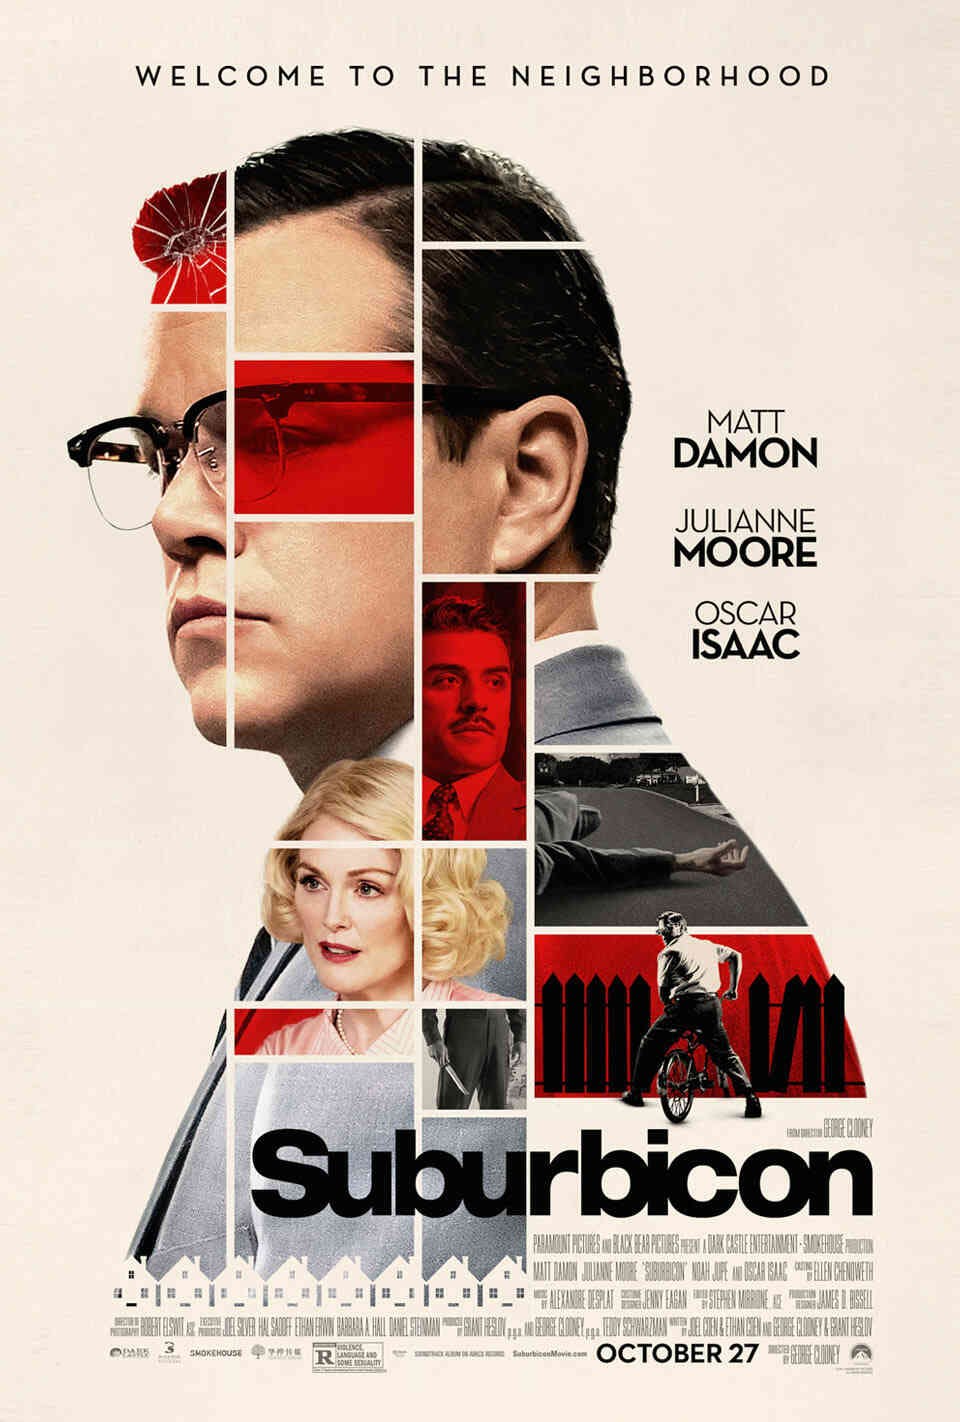 Read Suburbicon screenplay (poster)